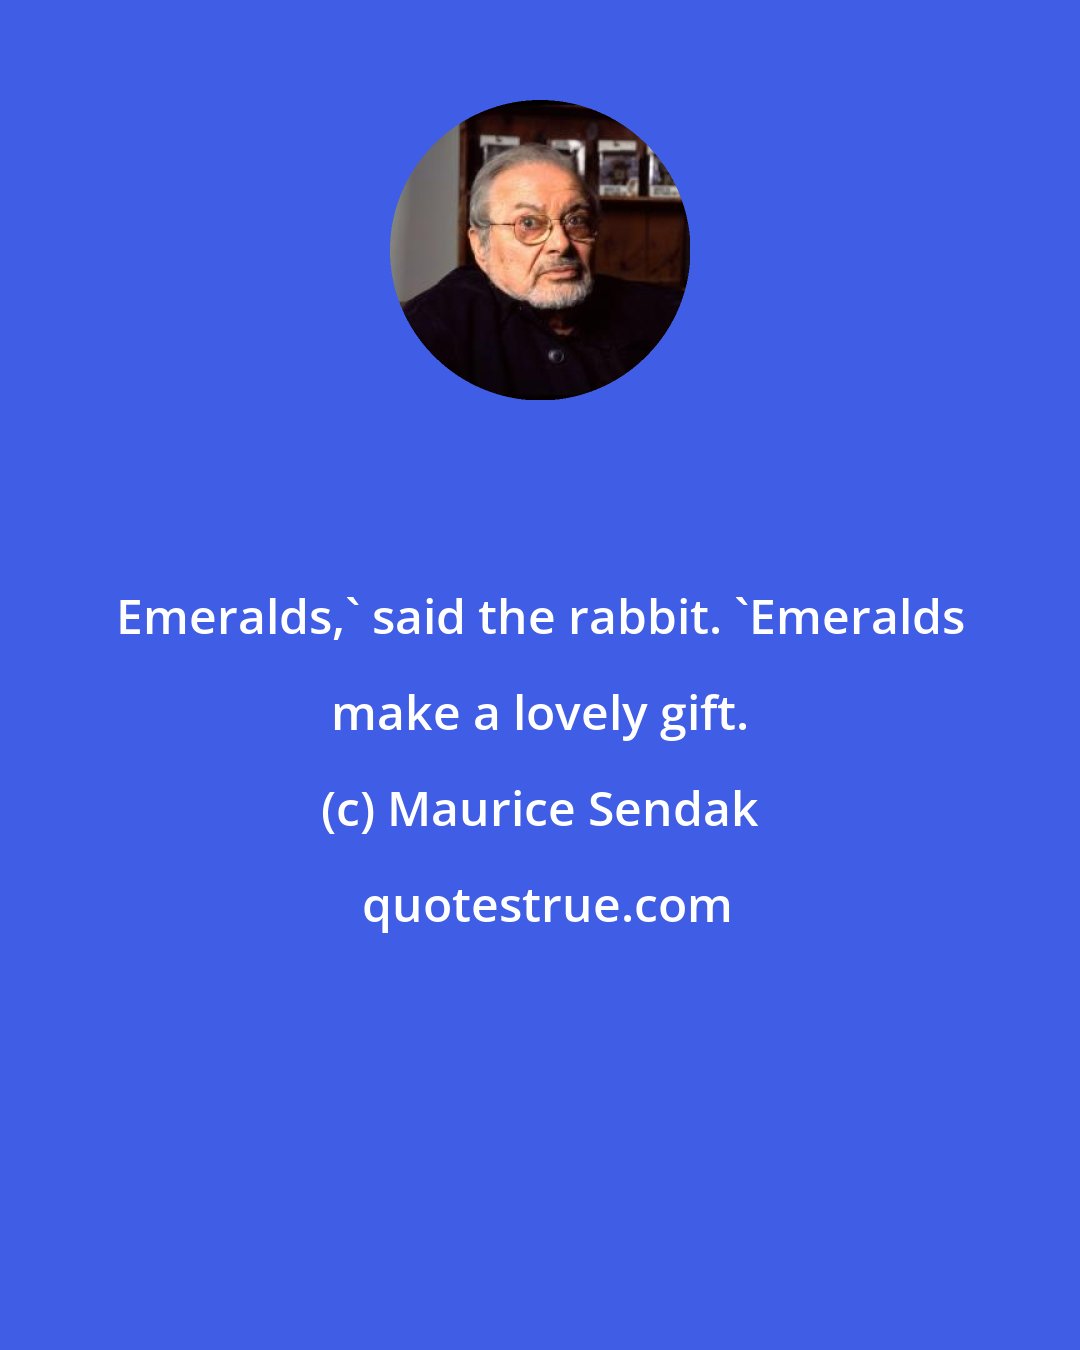 Maurice Sendak: Emeralds,' said the rabbit. 'Emeralds make a lovely gift.